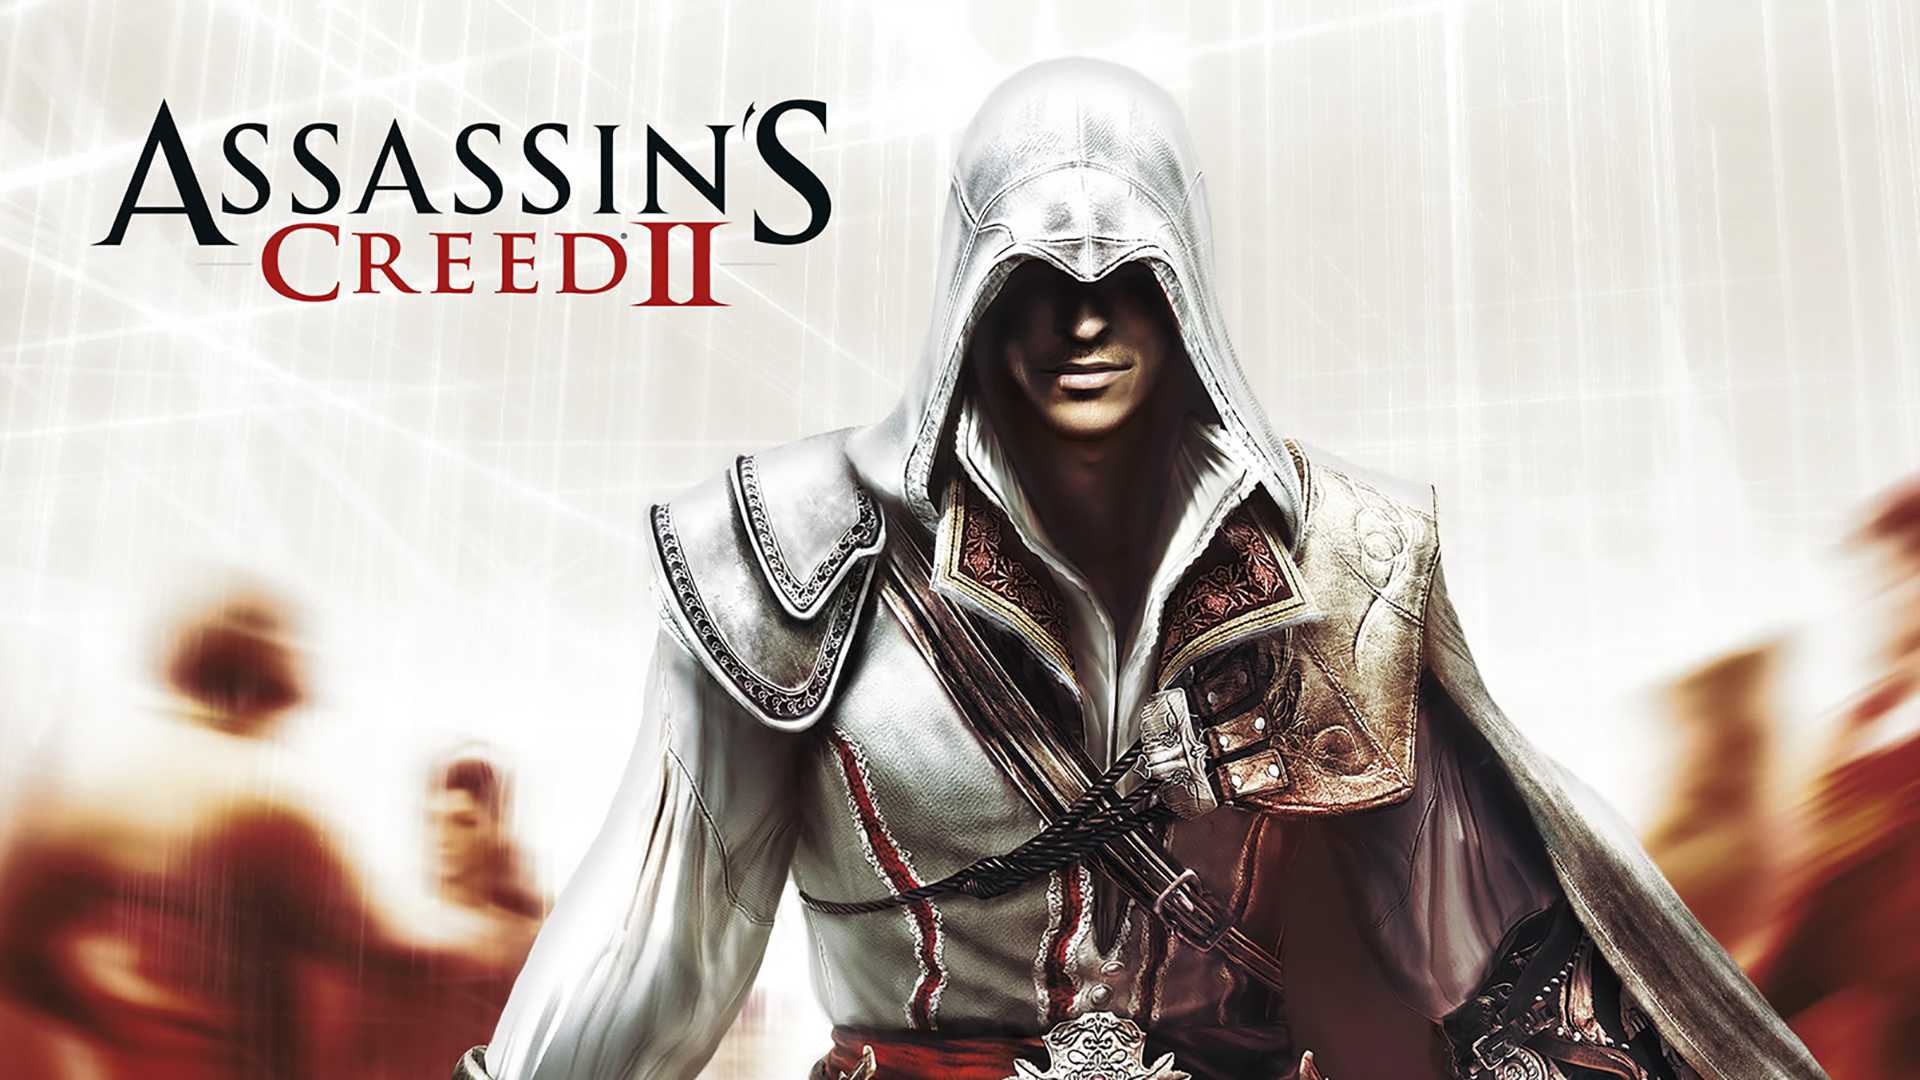 Assasın creed 2. Assassin’s Creed the Ezio collection. Эцио ассасин 2 Постер. Ассасин Крид 2 Делюкс эдишн. Ассасин Крид 2 Эцио.